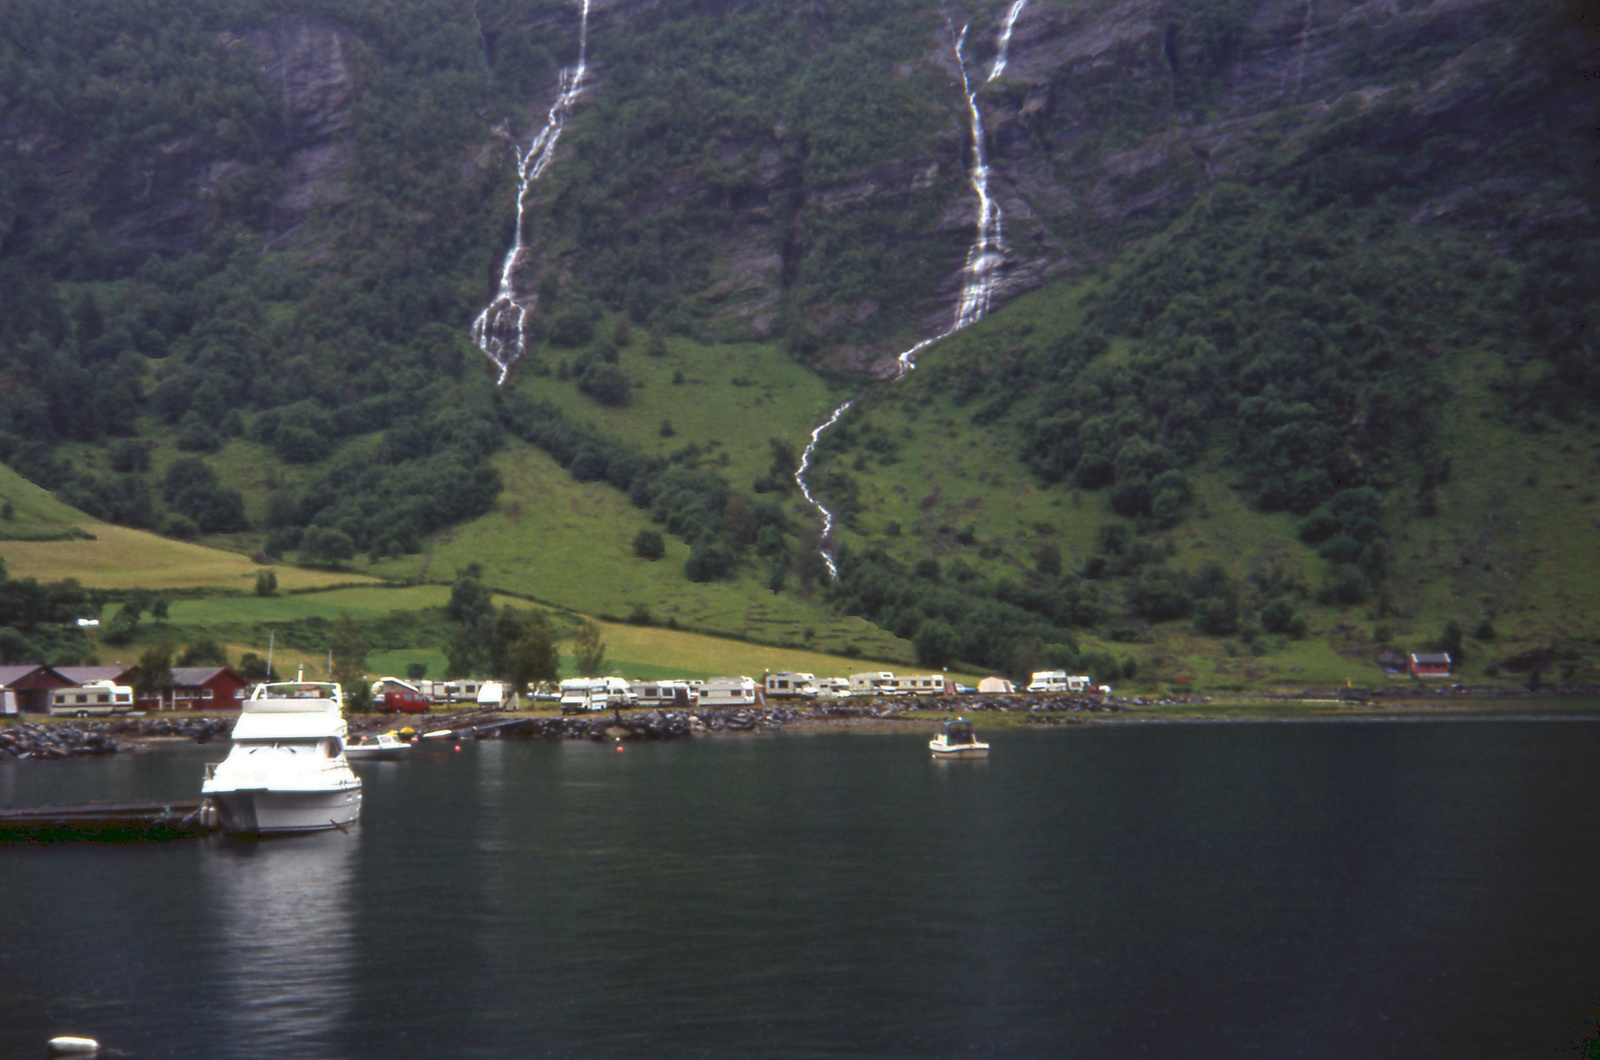 Geiranger fjord alulról